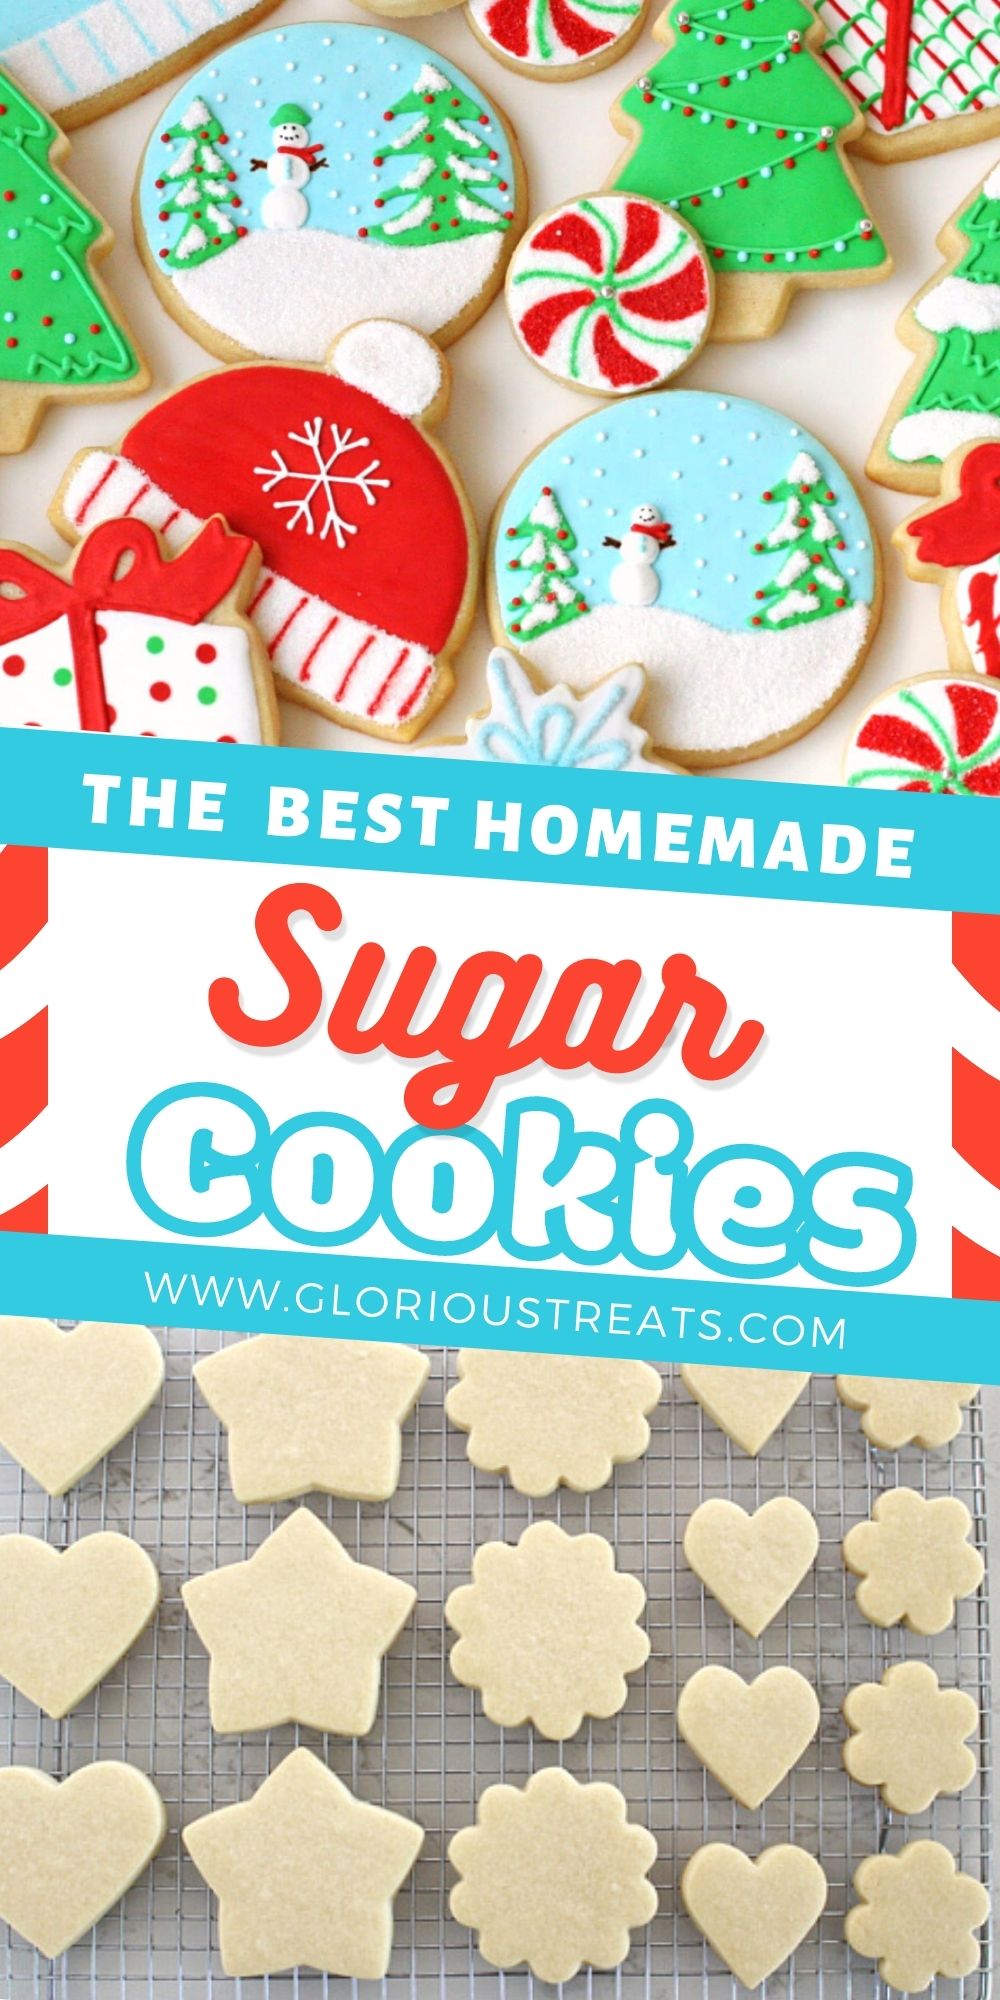 Perfect Sugar Cookie Recipe - Glorious Treats